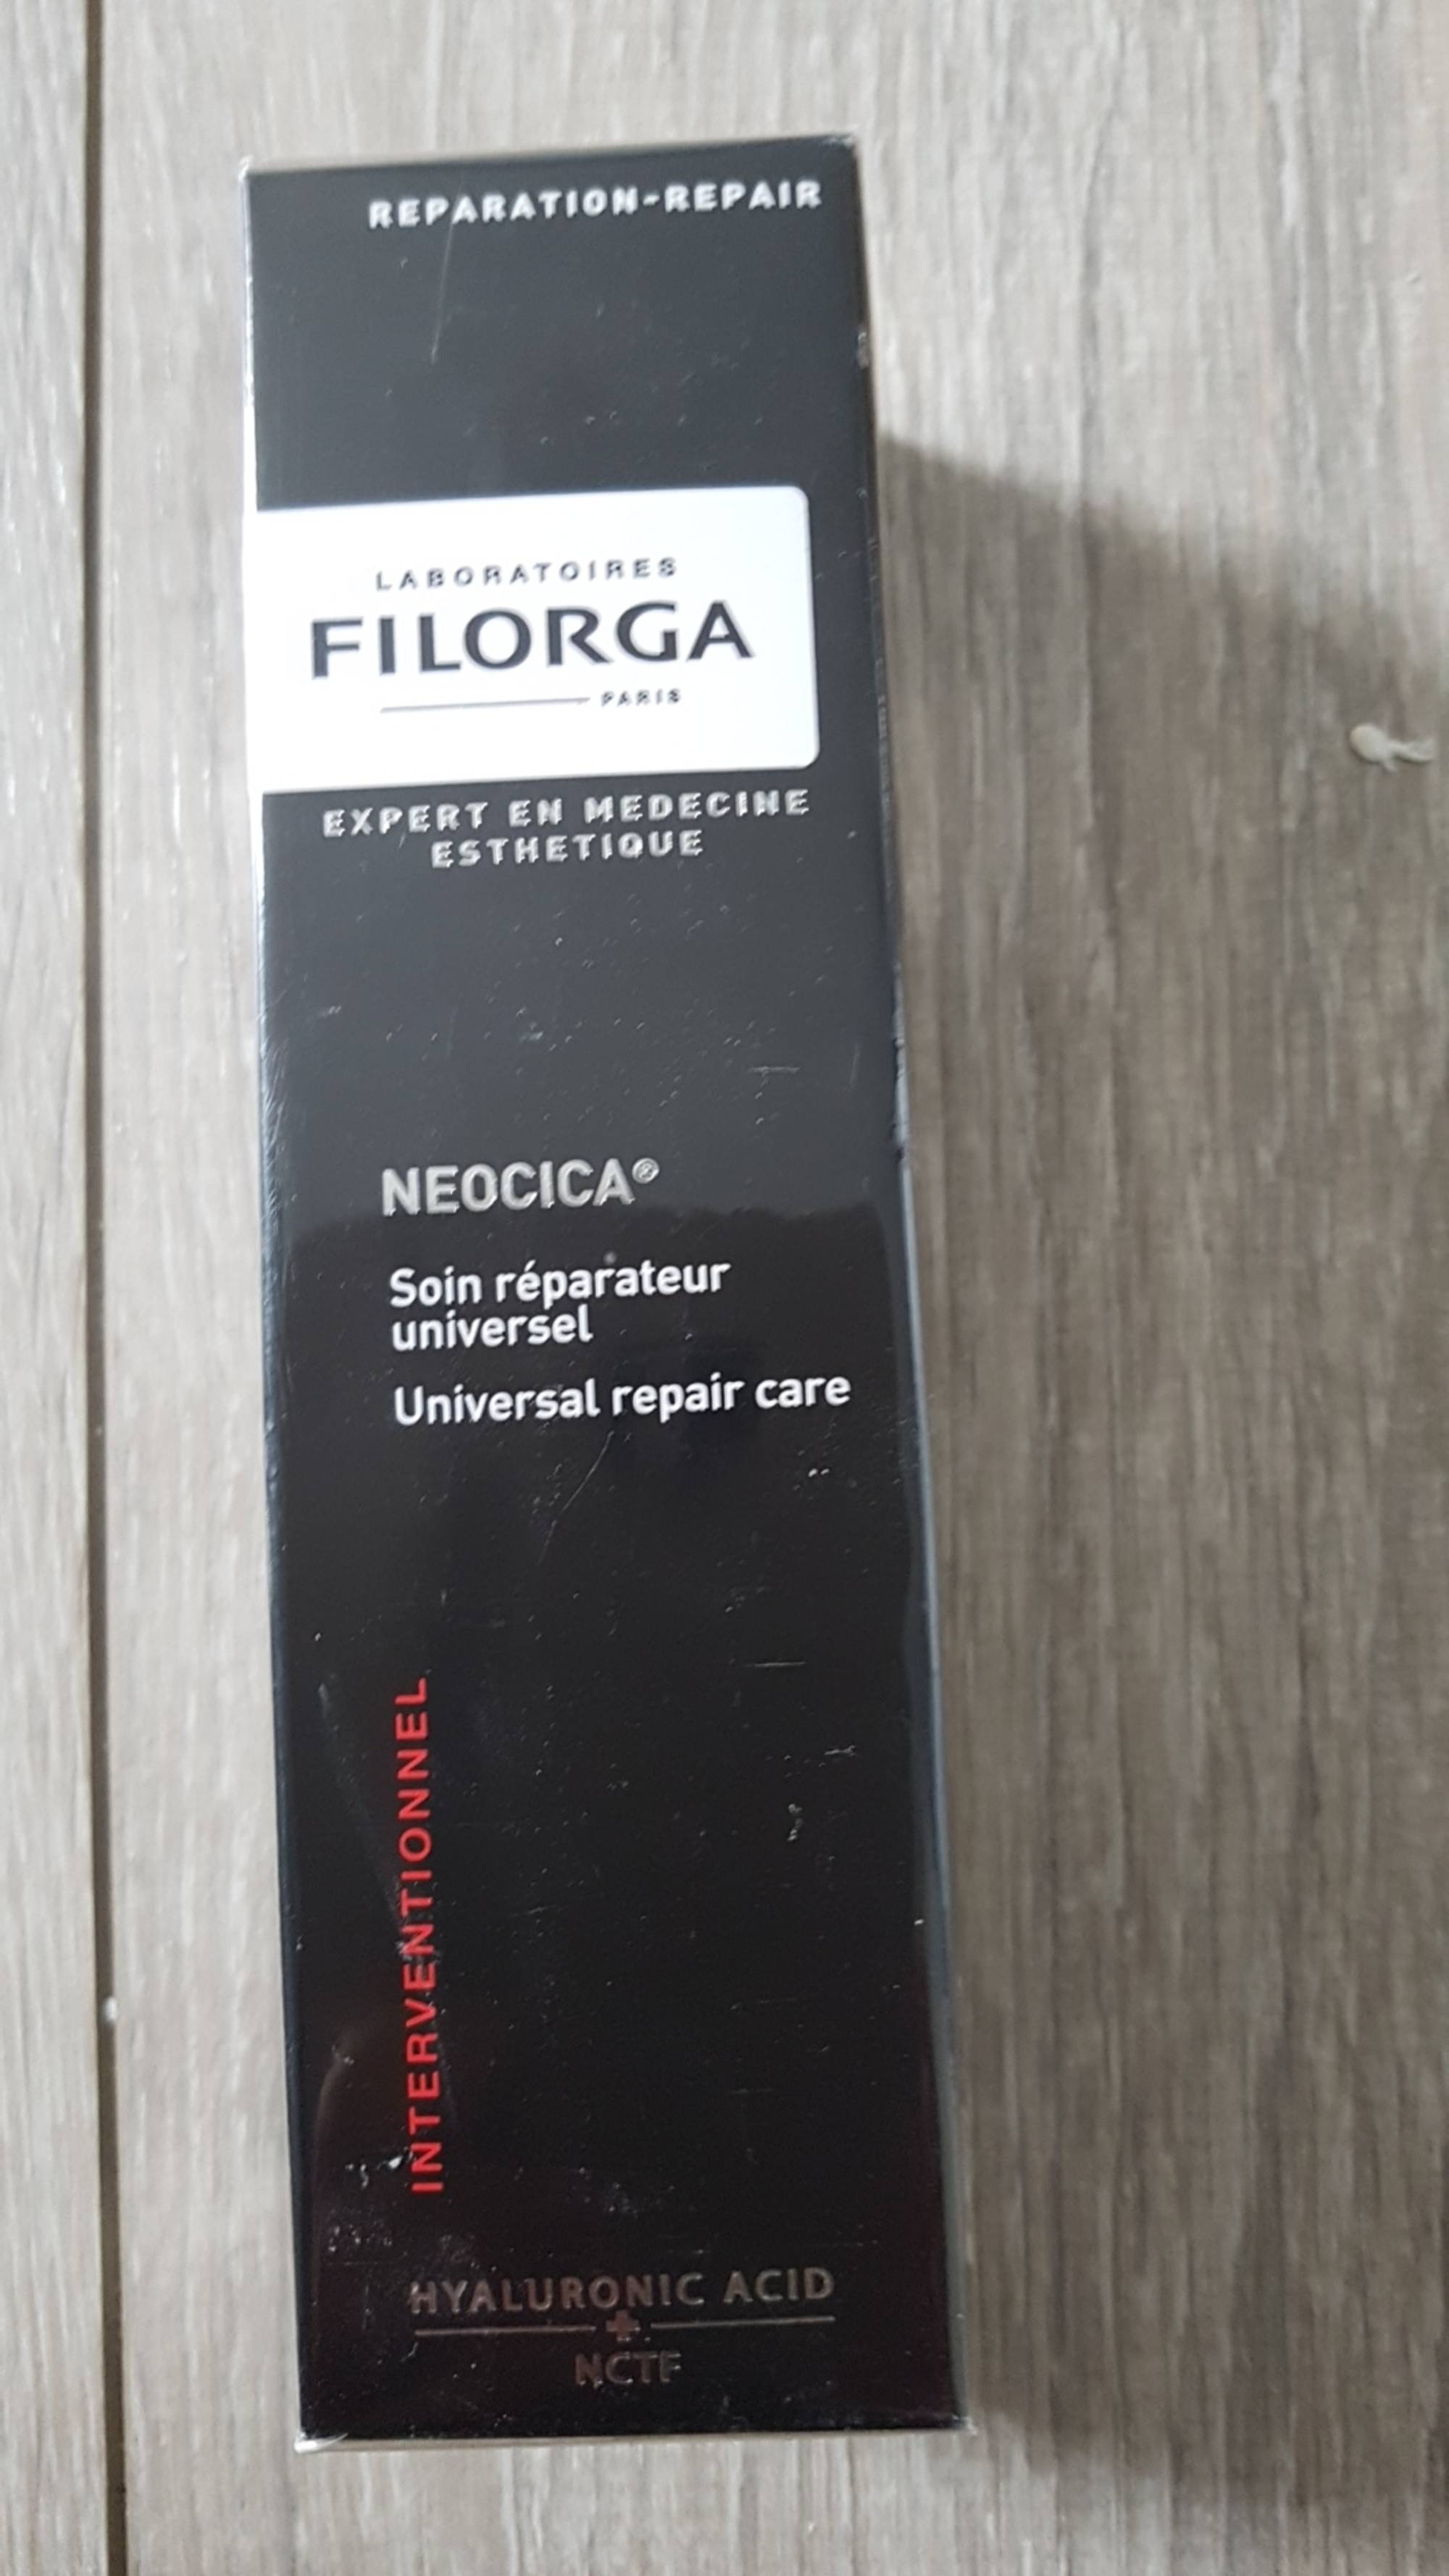 FILORGA - Neocica - Soin réparateur universel